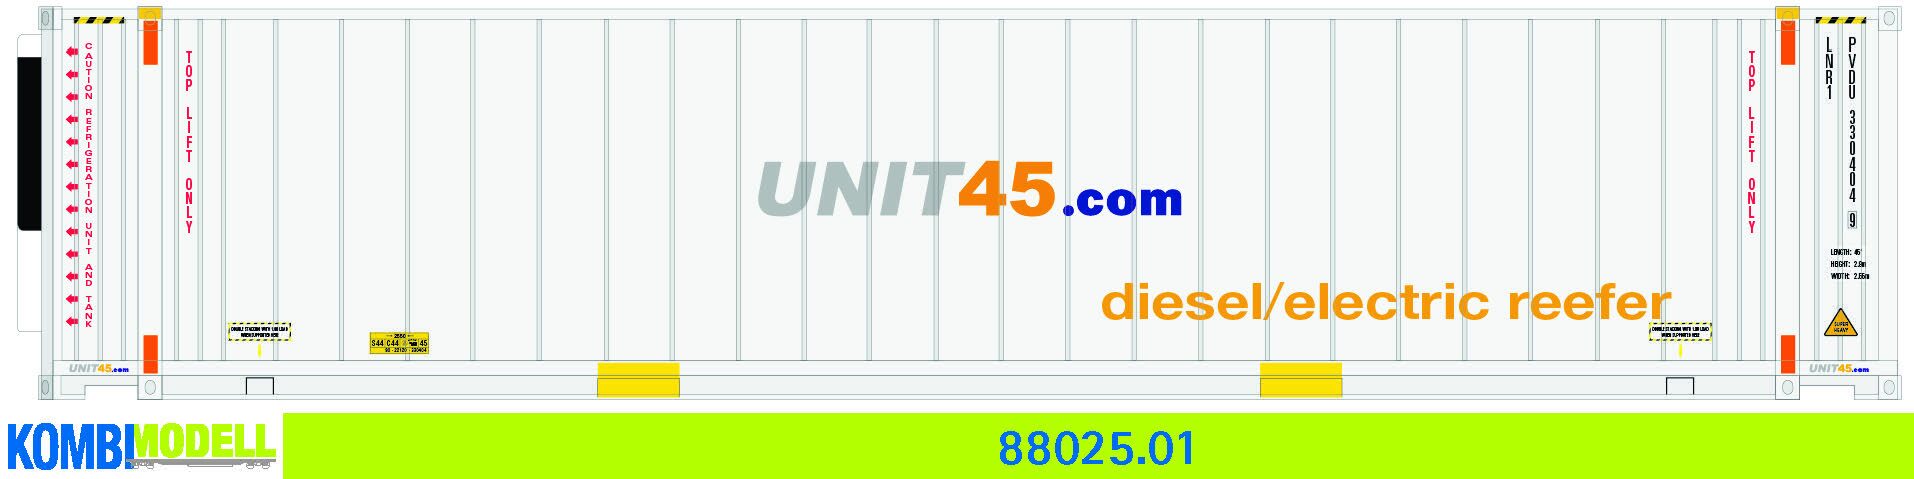 Kombimodell 88025.01 WB-A /Ct 45' (Euro) Reefer (DE) Unit45"" #PVDU 330404